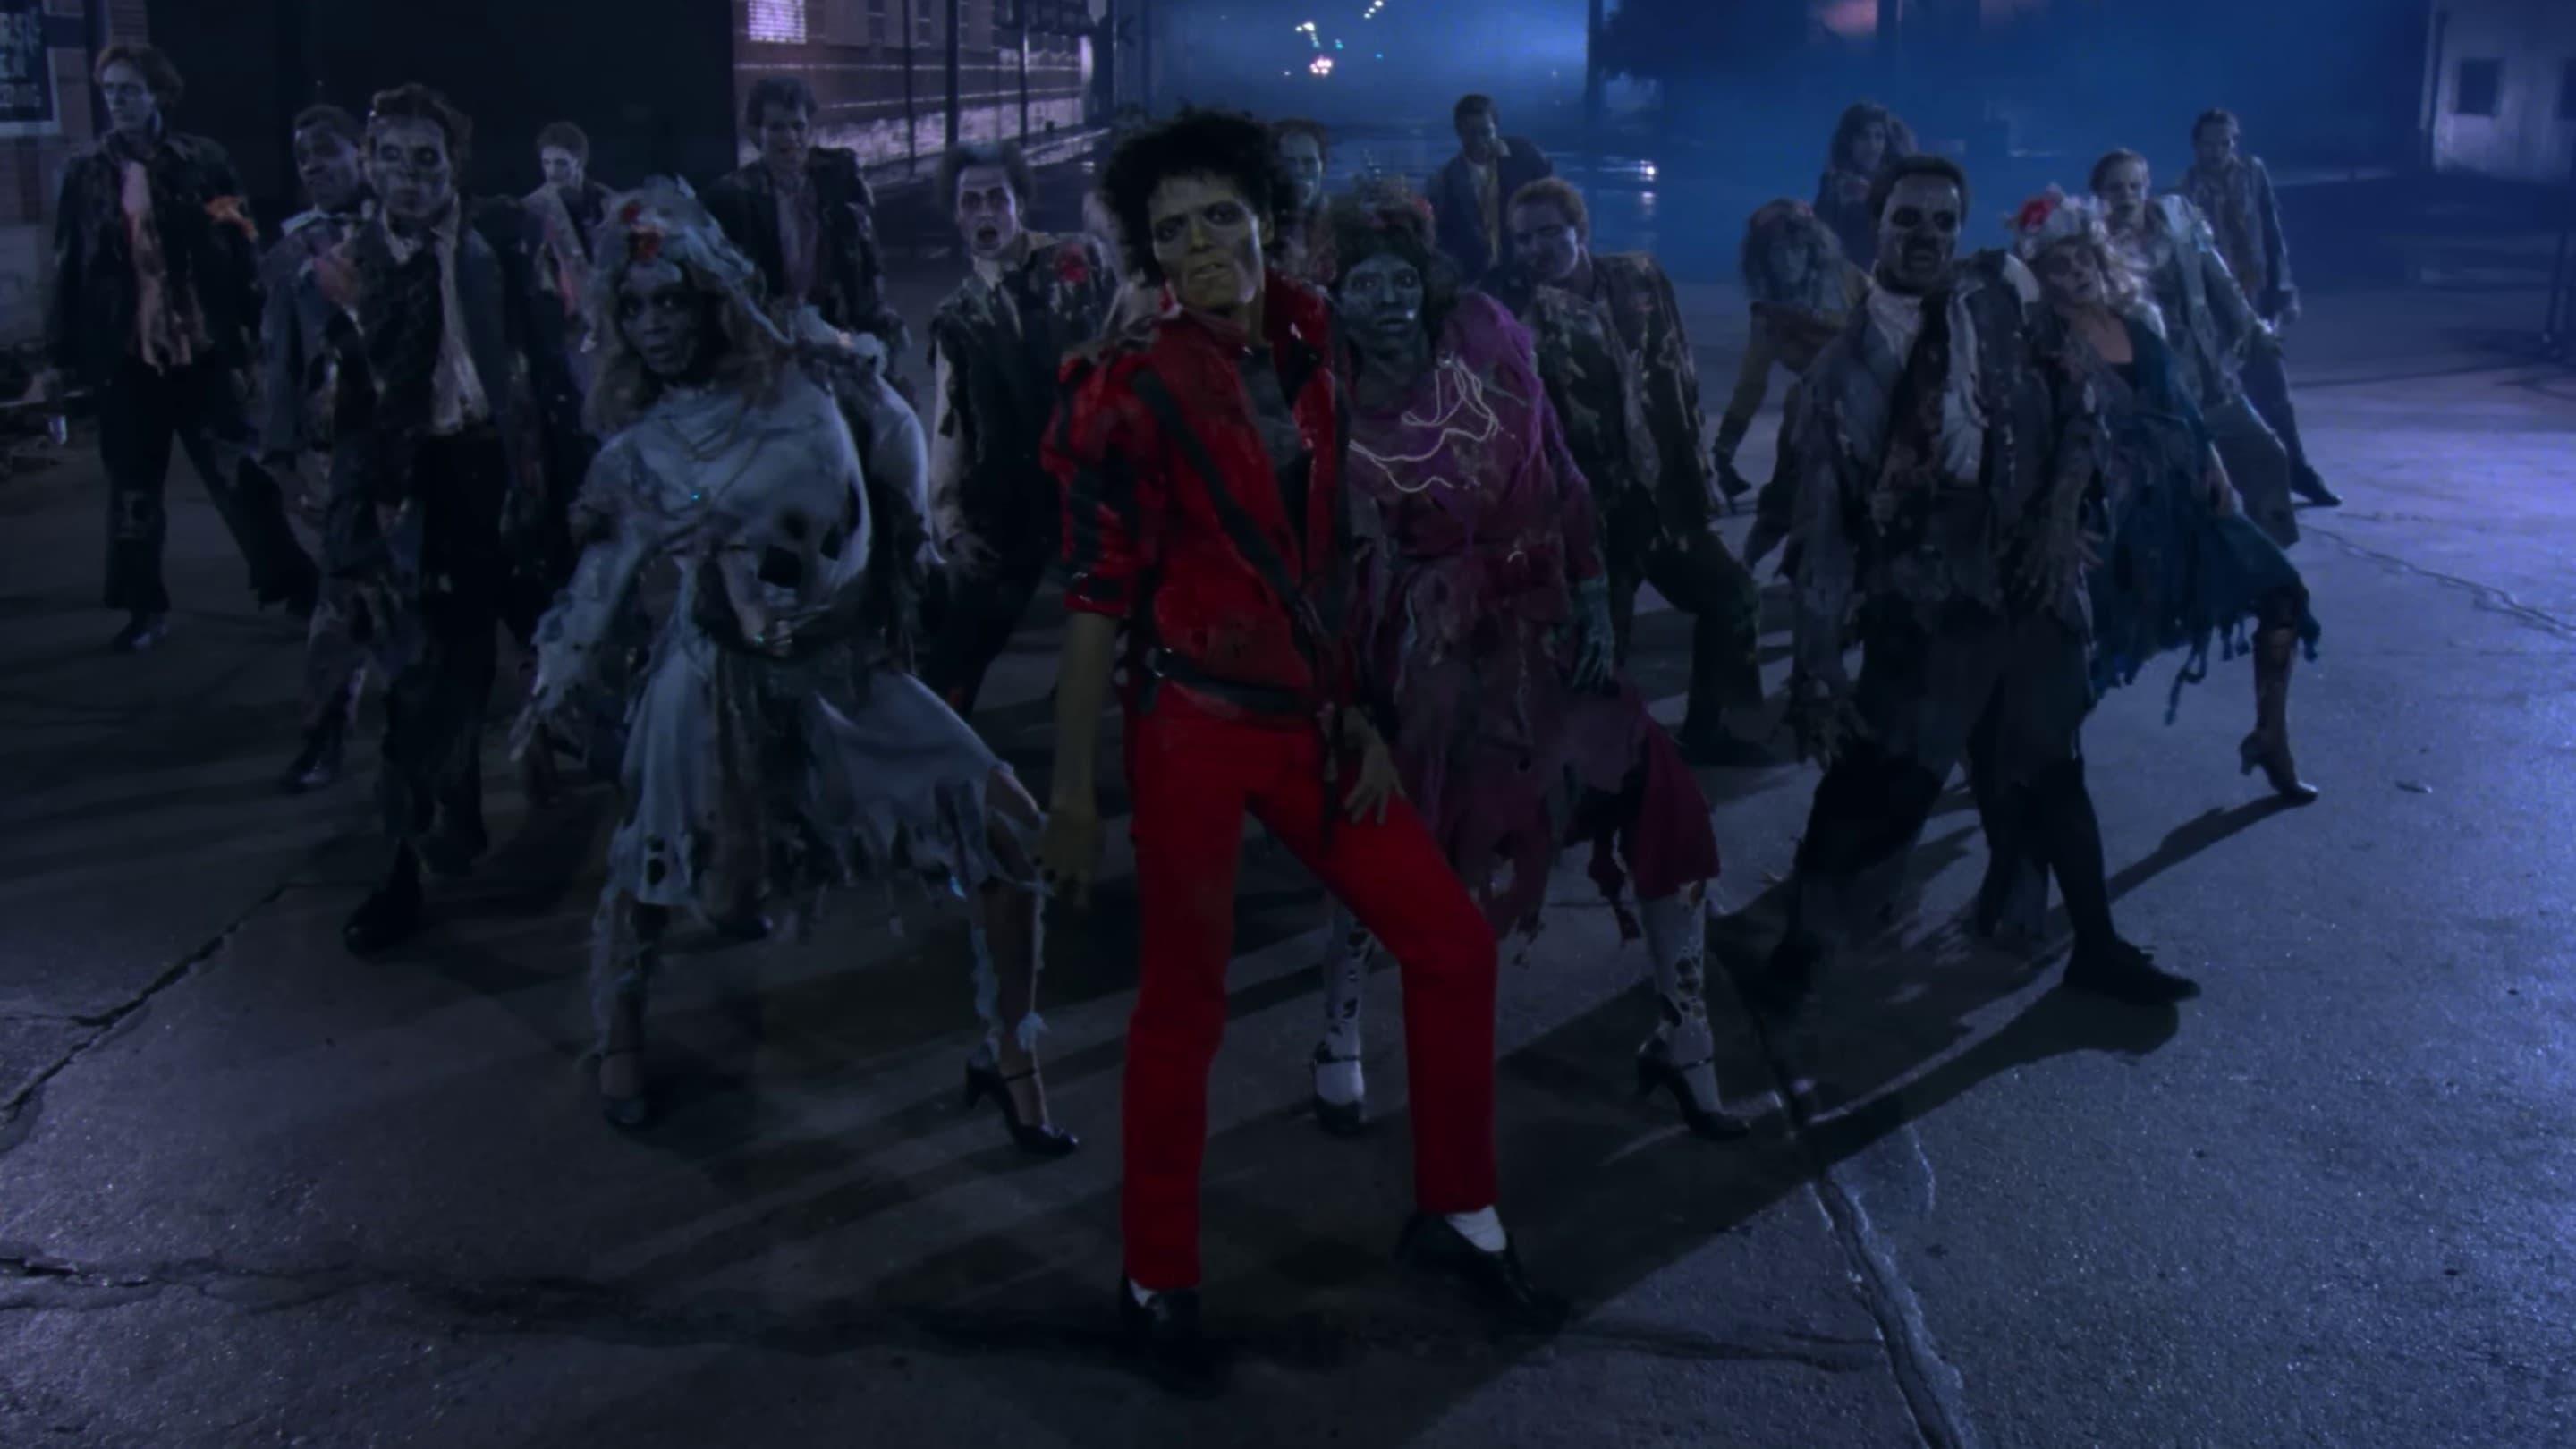 Michael Jackson's Thriller backdrop